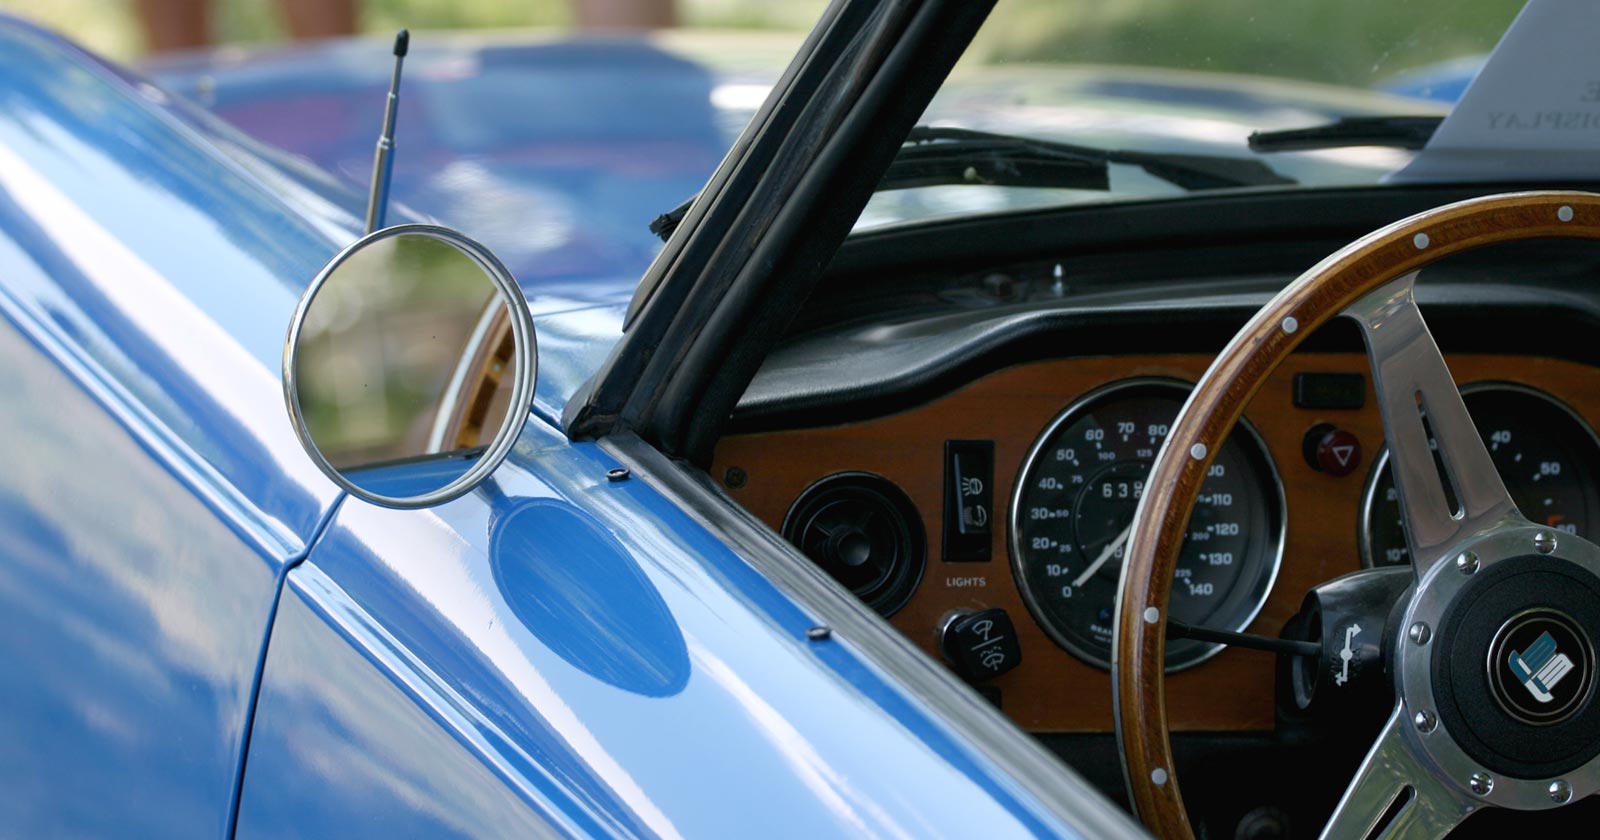 Classic car window and dashboard